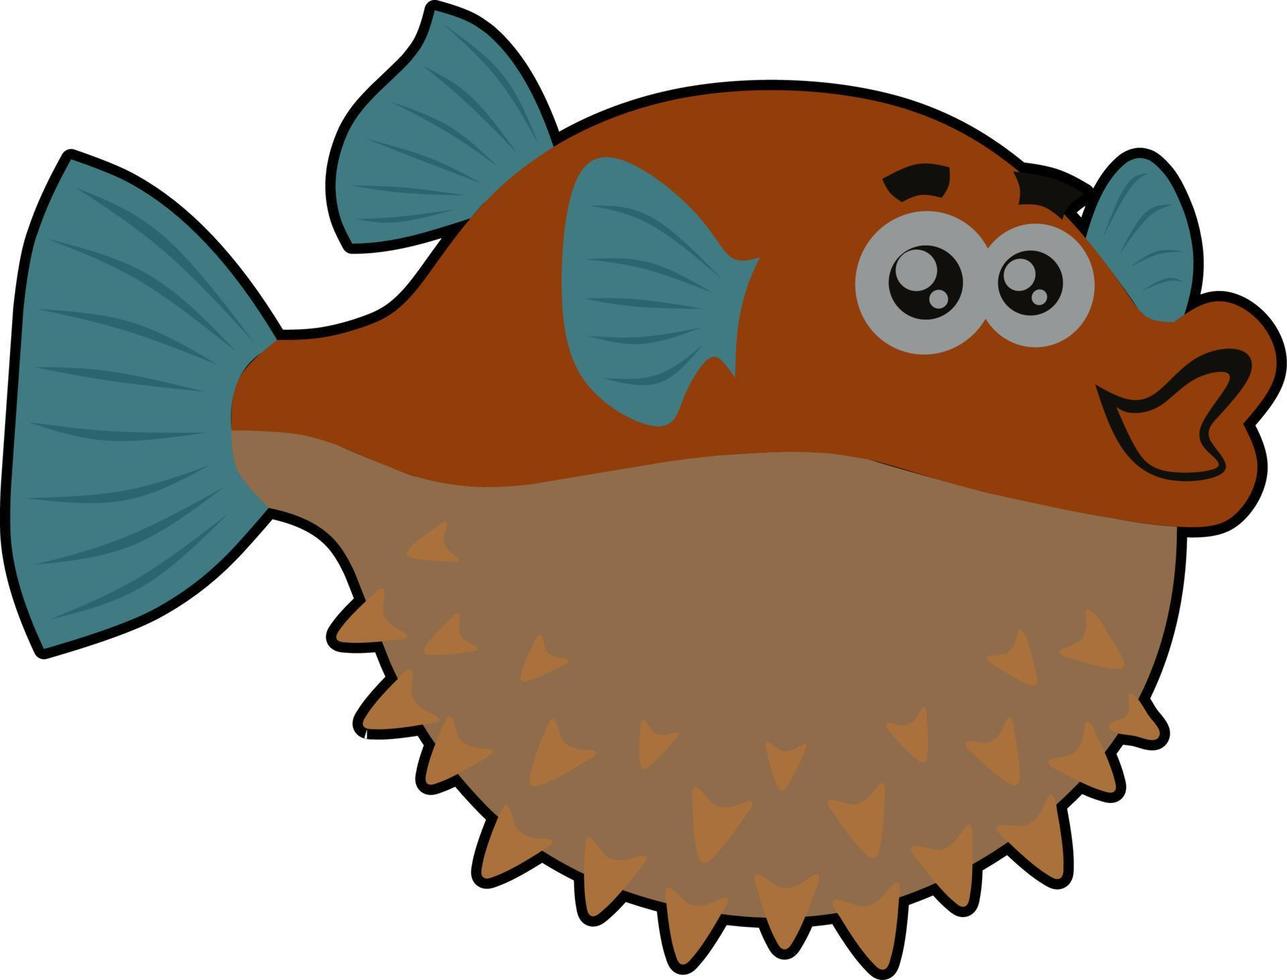 Puffer fish cartoon character vector